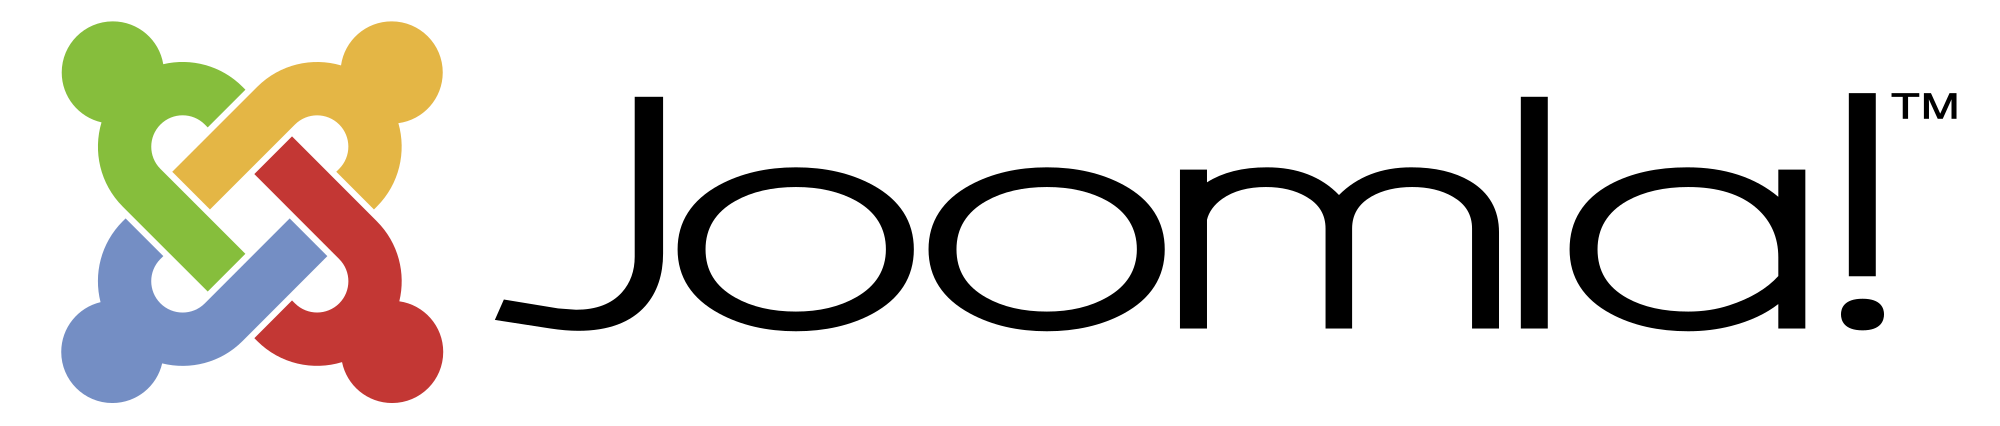 Flat brandmark Joomla-3D-logo